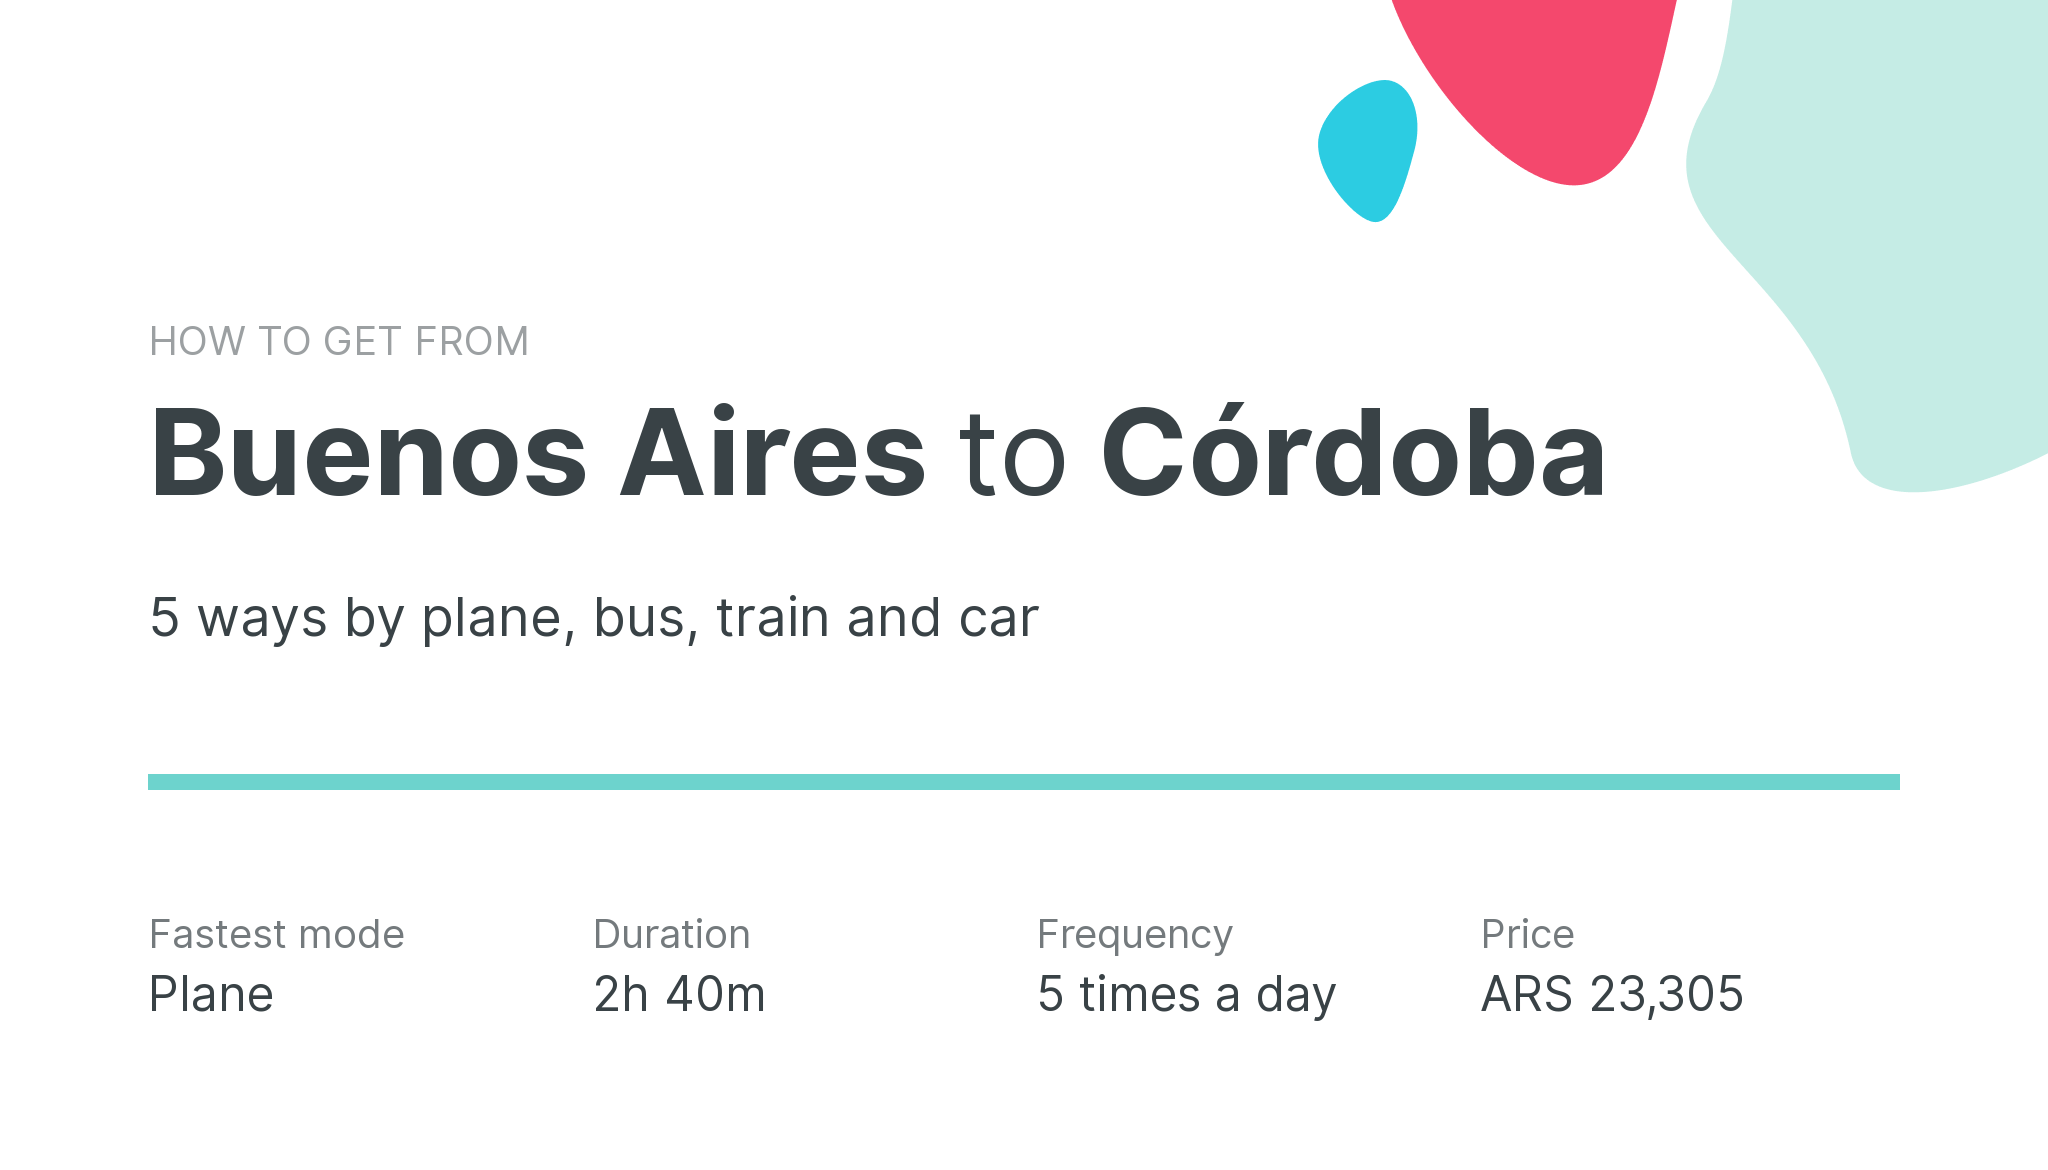 How do I get from Buenos Aires to Córdoba